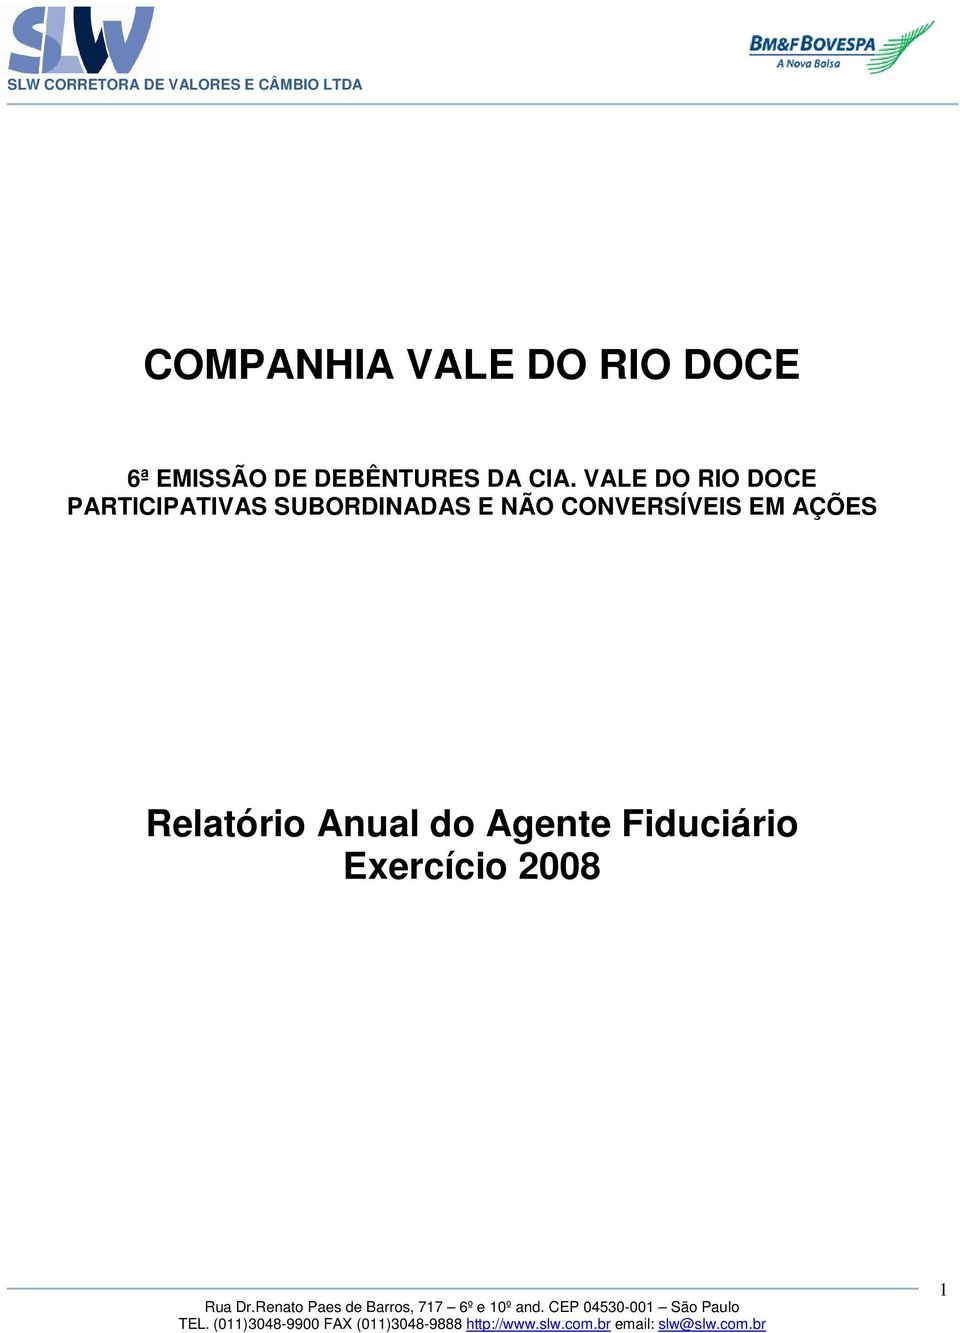 VALE DO RIO DOCE PARTICIPATIVAS SUBORDINADAS E